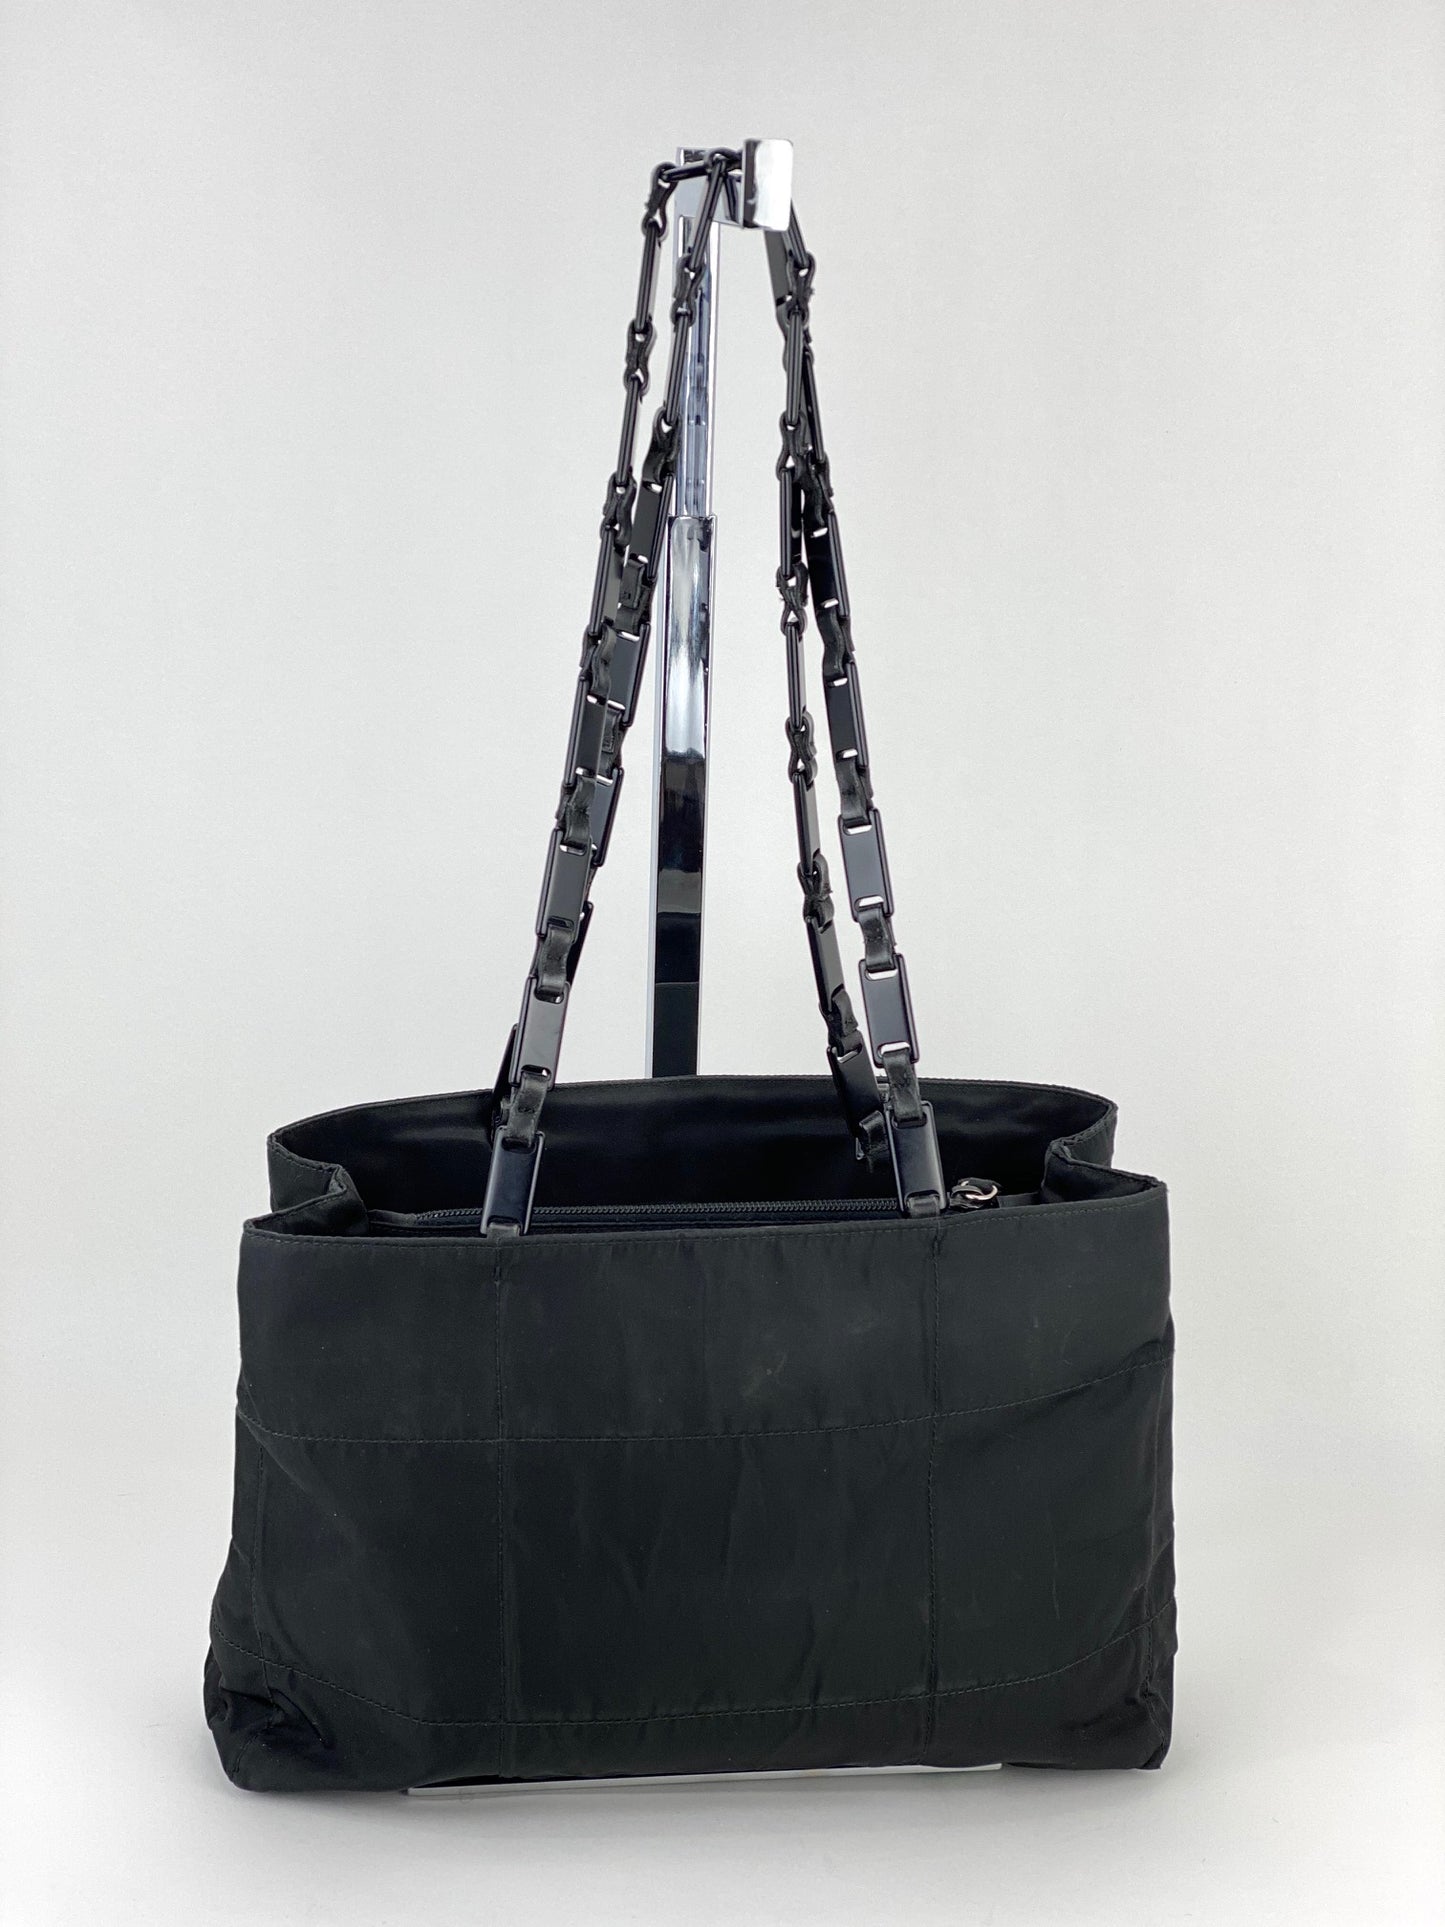 Prada Tessuto Nylon Tote with Chain Strap Shoulder Bag Pre Owned